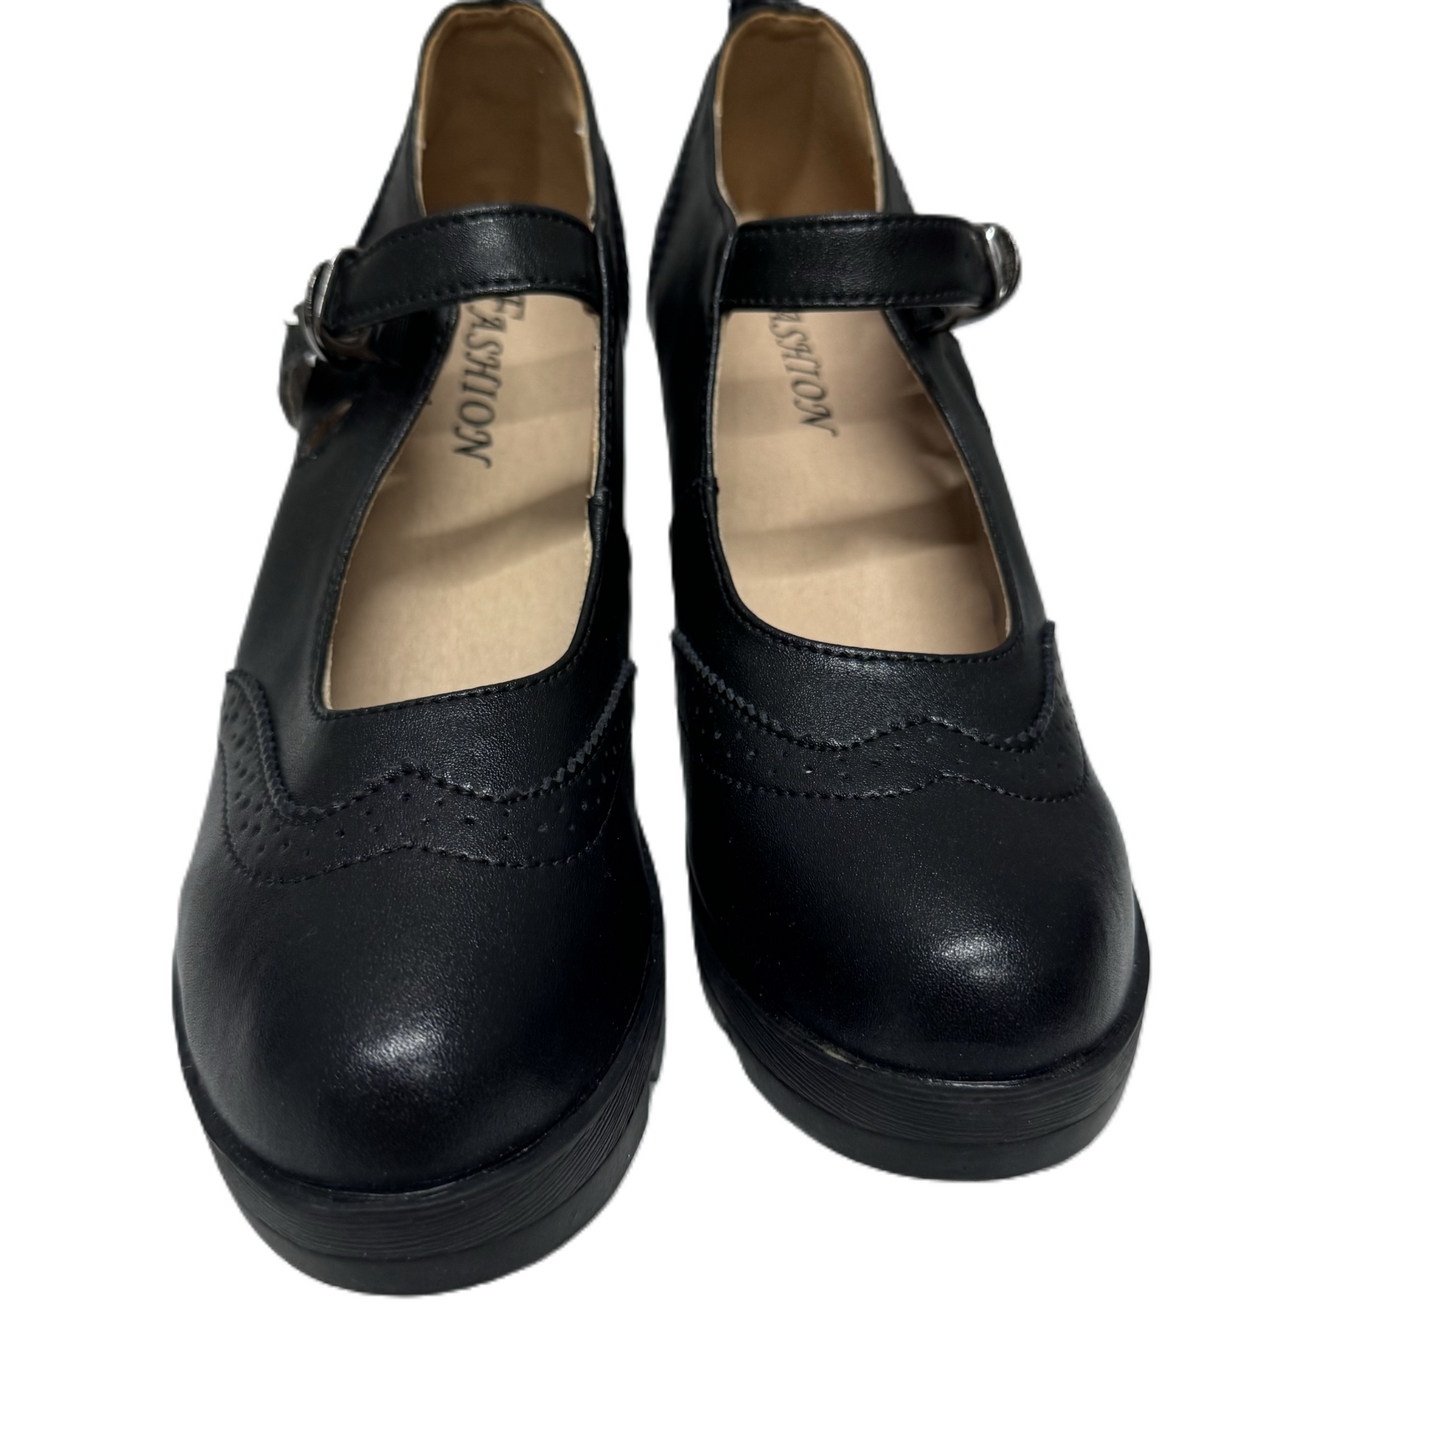 Black Shoes Heels Block By Dadawen, Size: 9.5